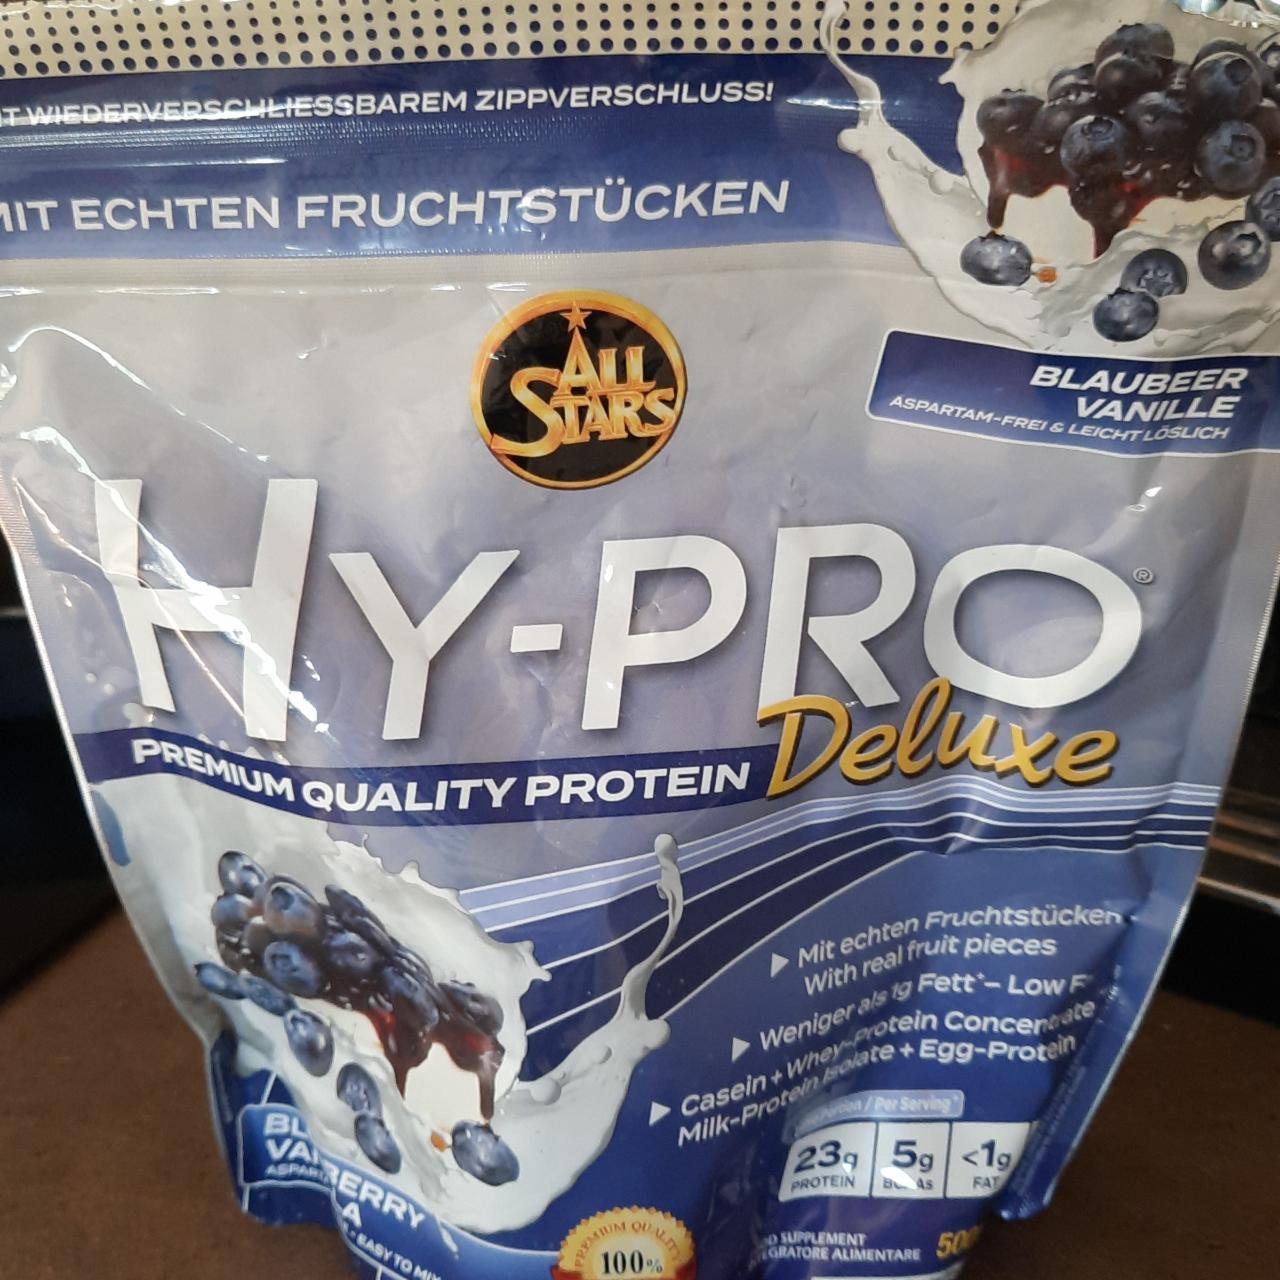 Fotografie - Hy-Pro premium quality protein Deluxe Blaubeer Vanille All Stars